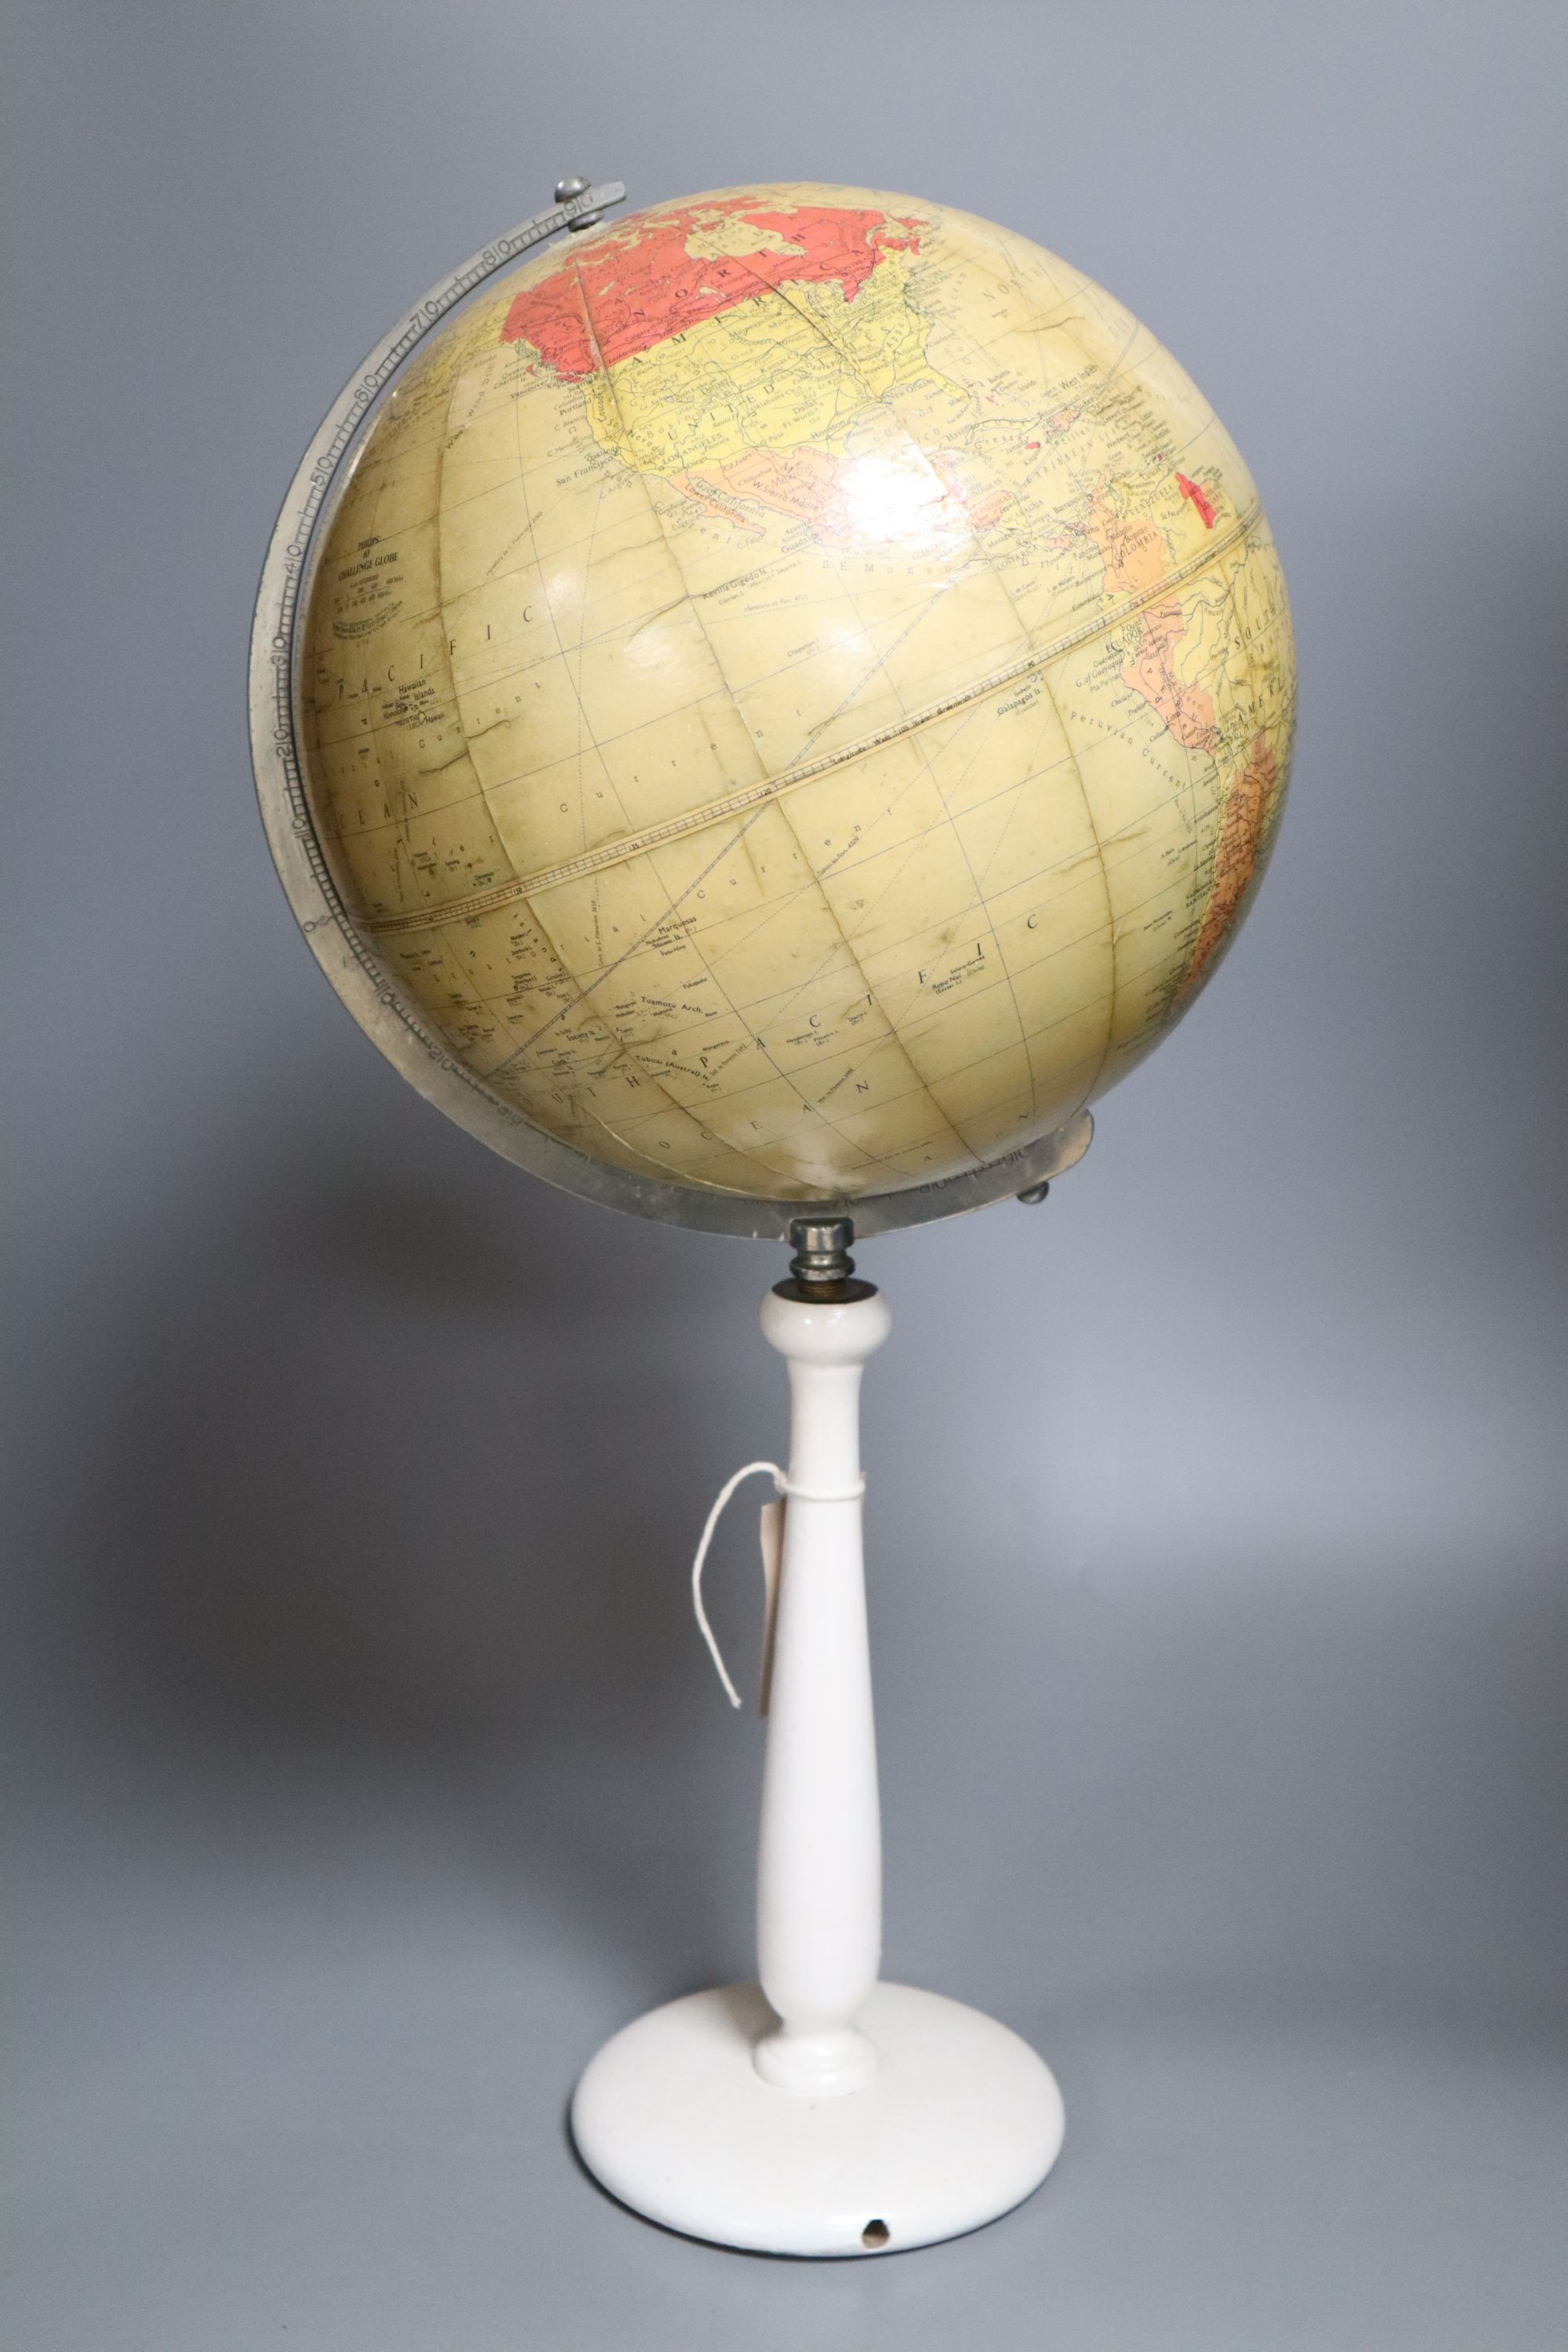 A Phillips 10 inch Challenge globe